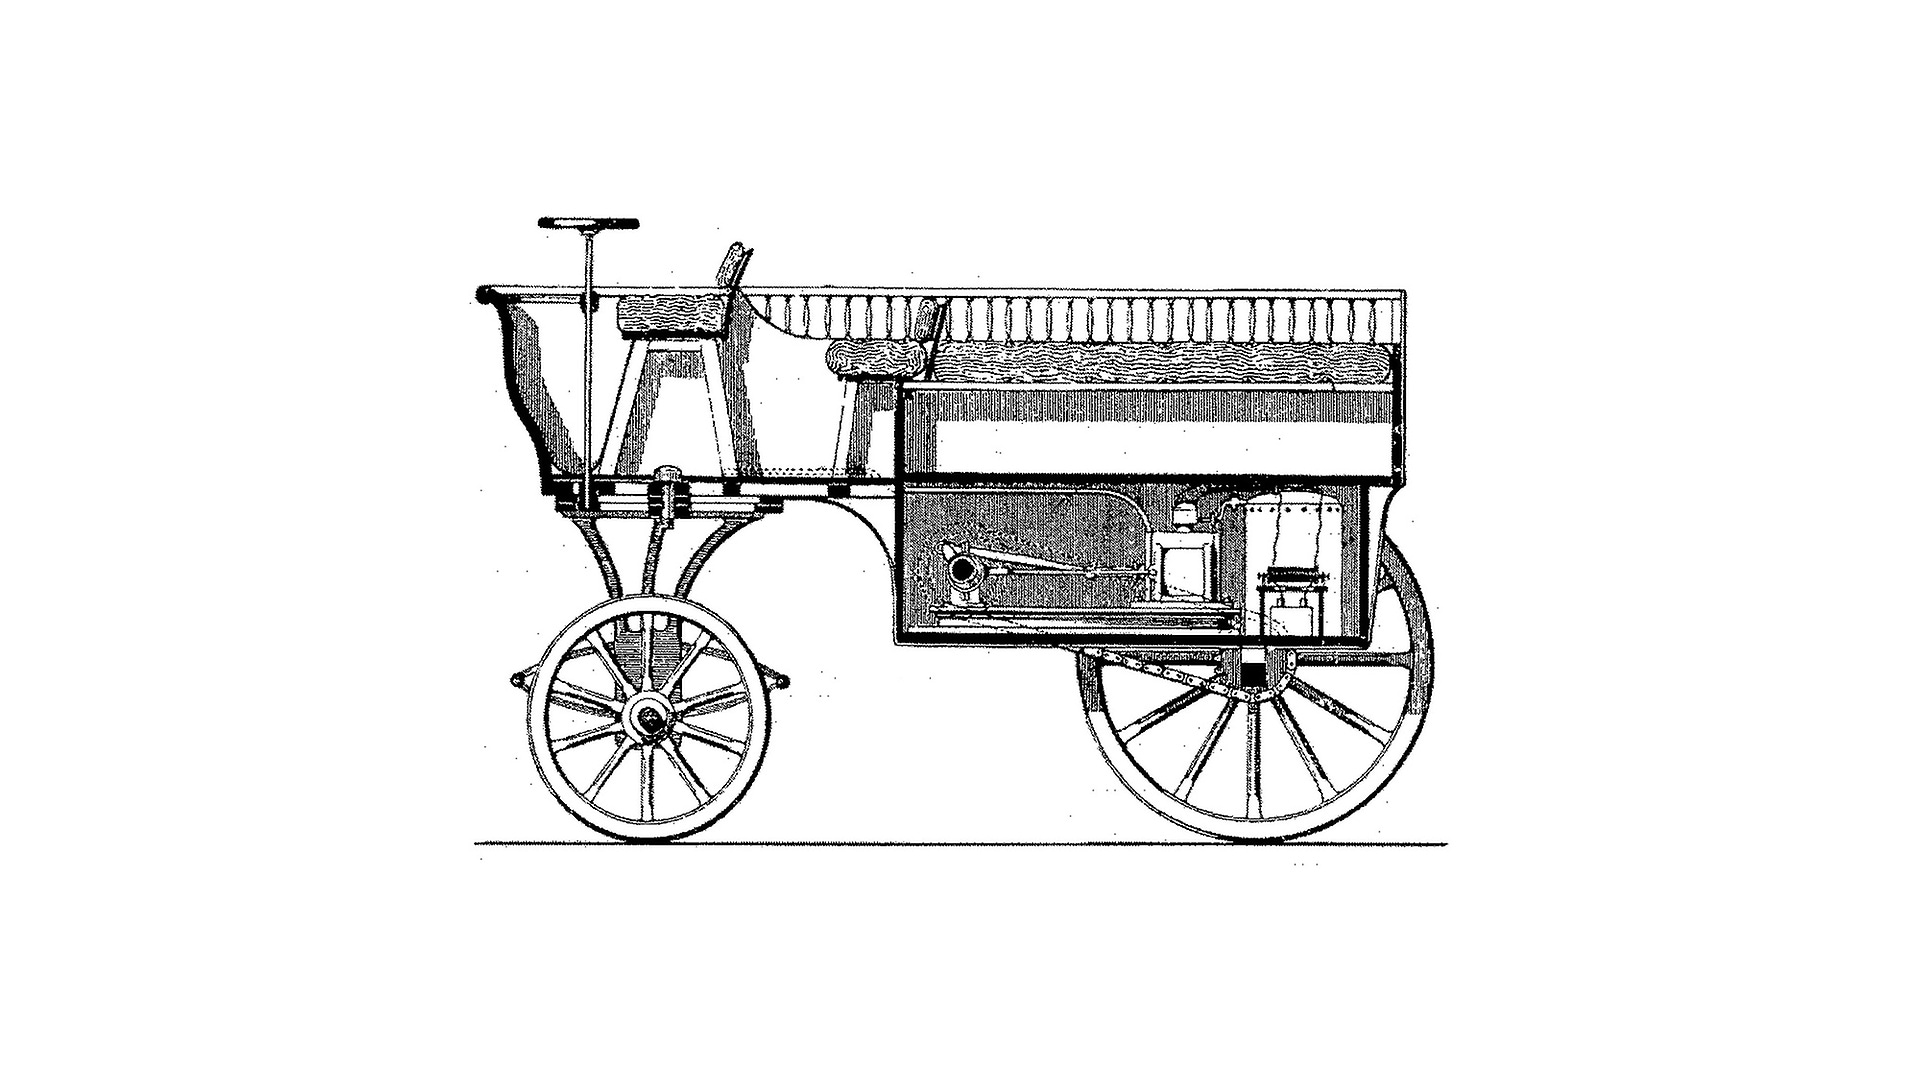 Motor vehicle built by Jean-Joseph-Etienne Lenoir, powered by an atmospheric engine, 1863. Design drawing from the publication "Le Monde Illustré" of 18 June 1860.